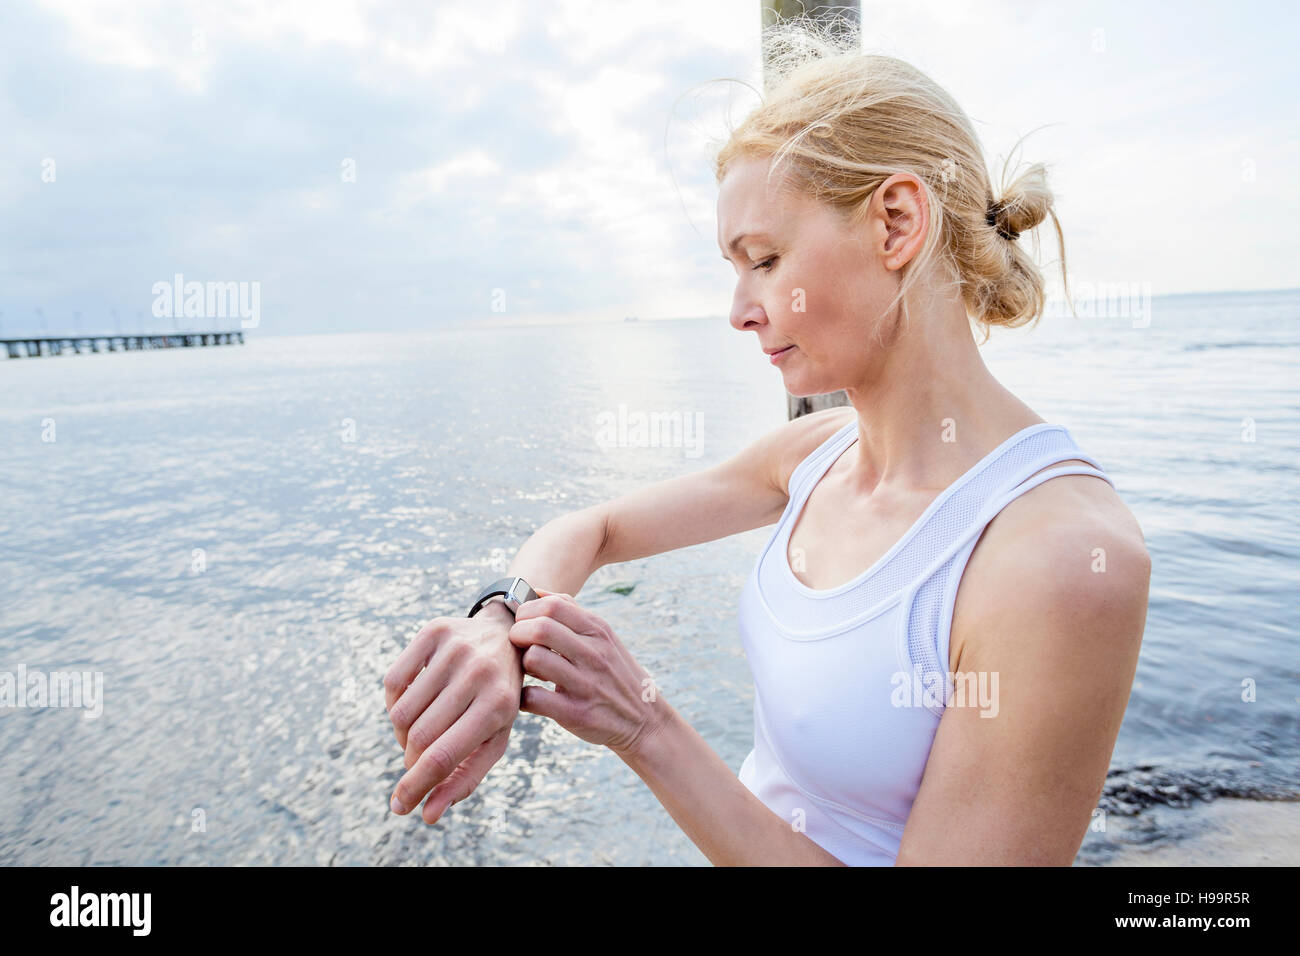 Woman on beach checking running watch Stock Photo